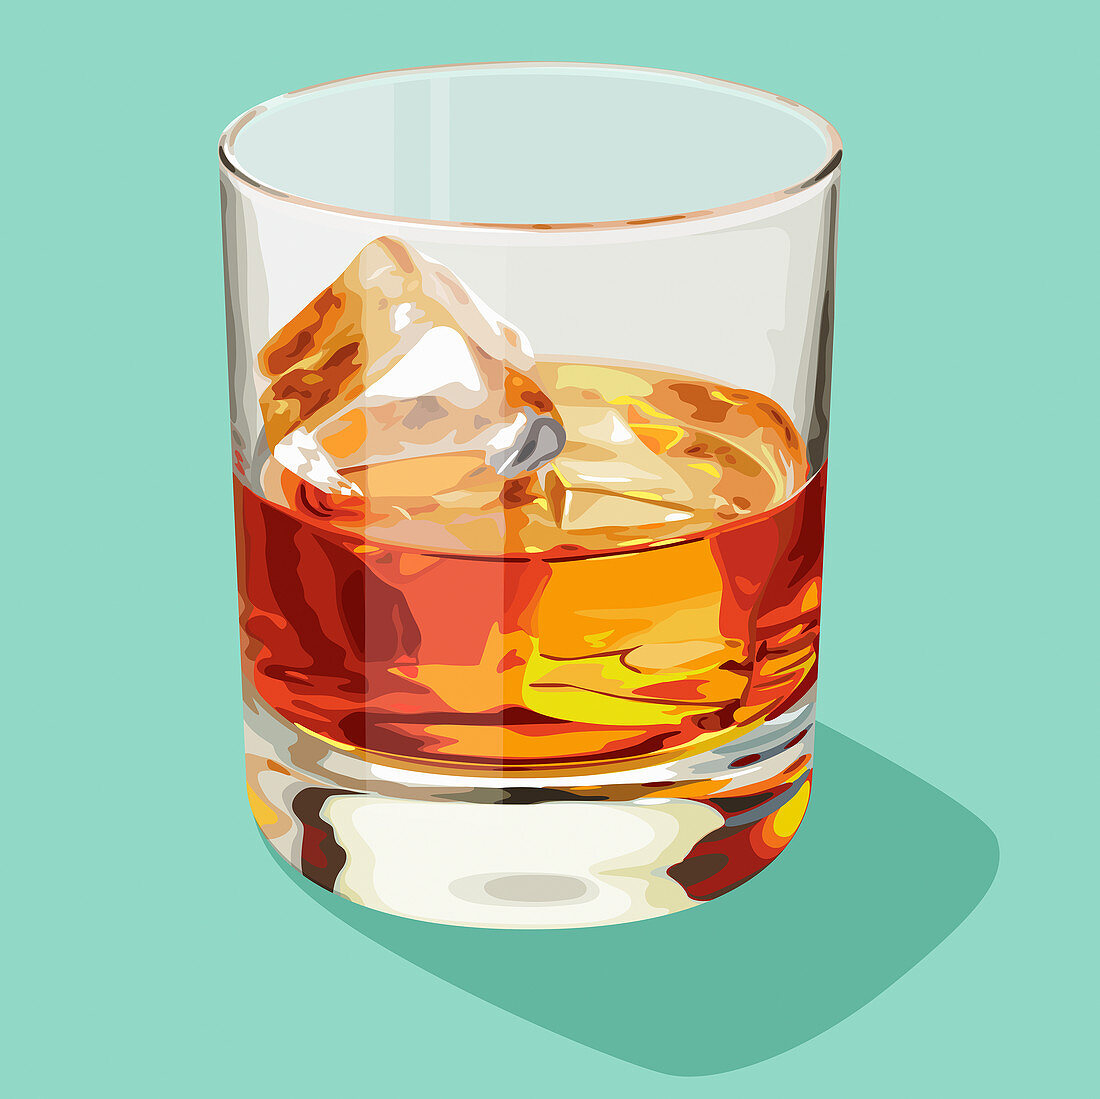 Glass of whisky on the rocks, illustration